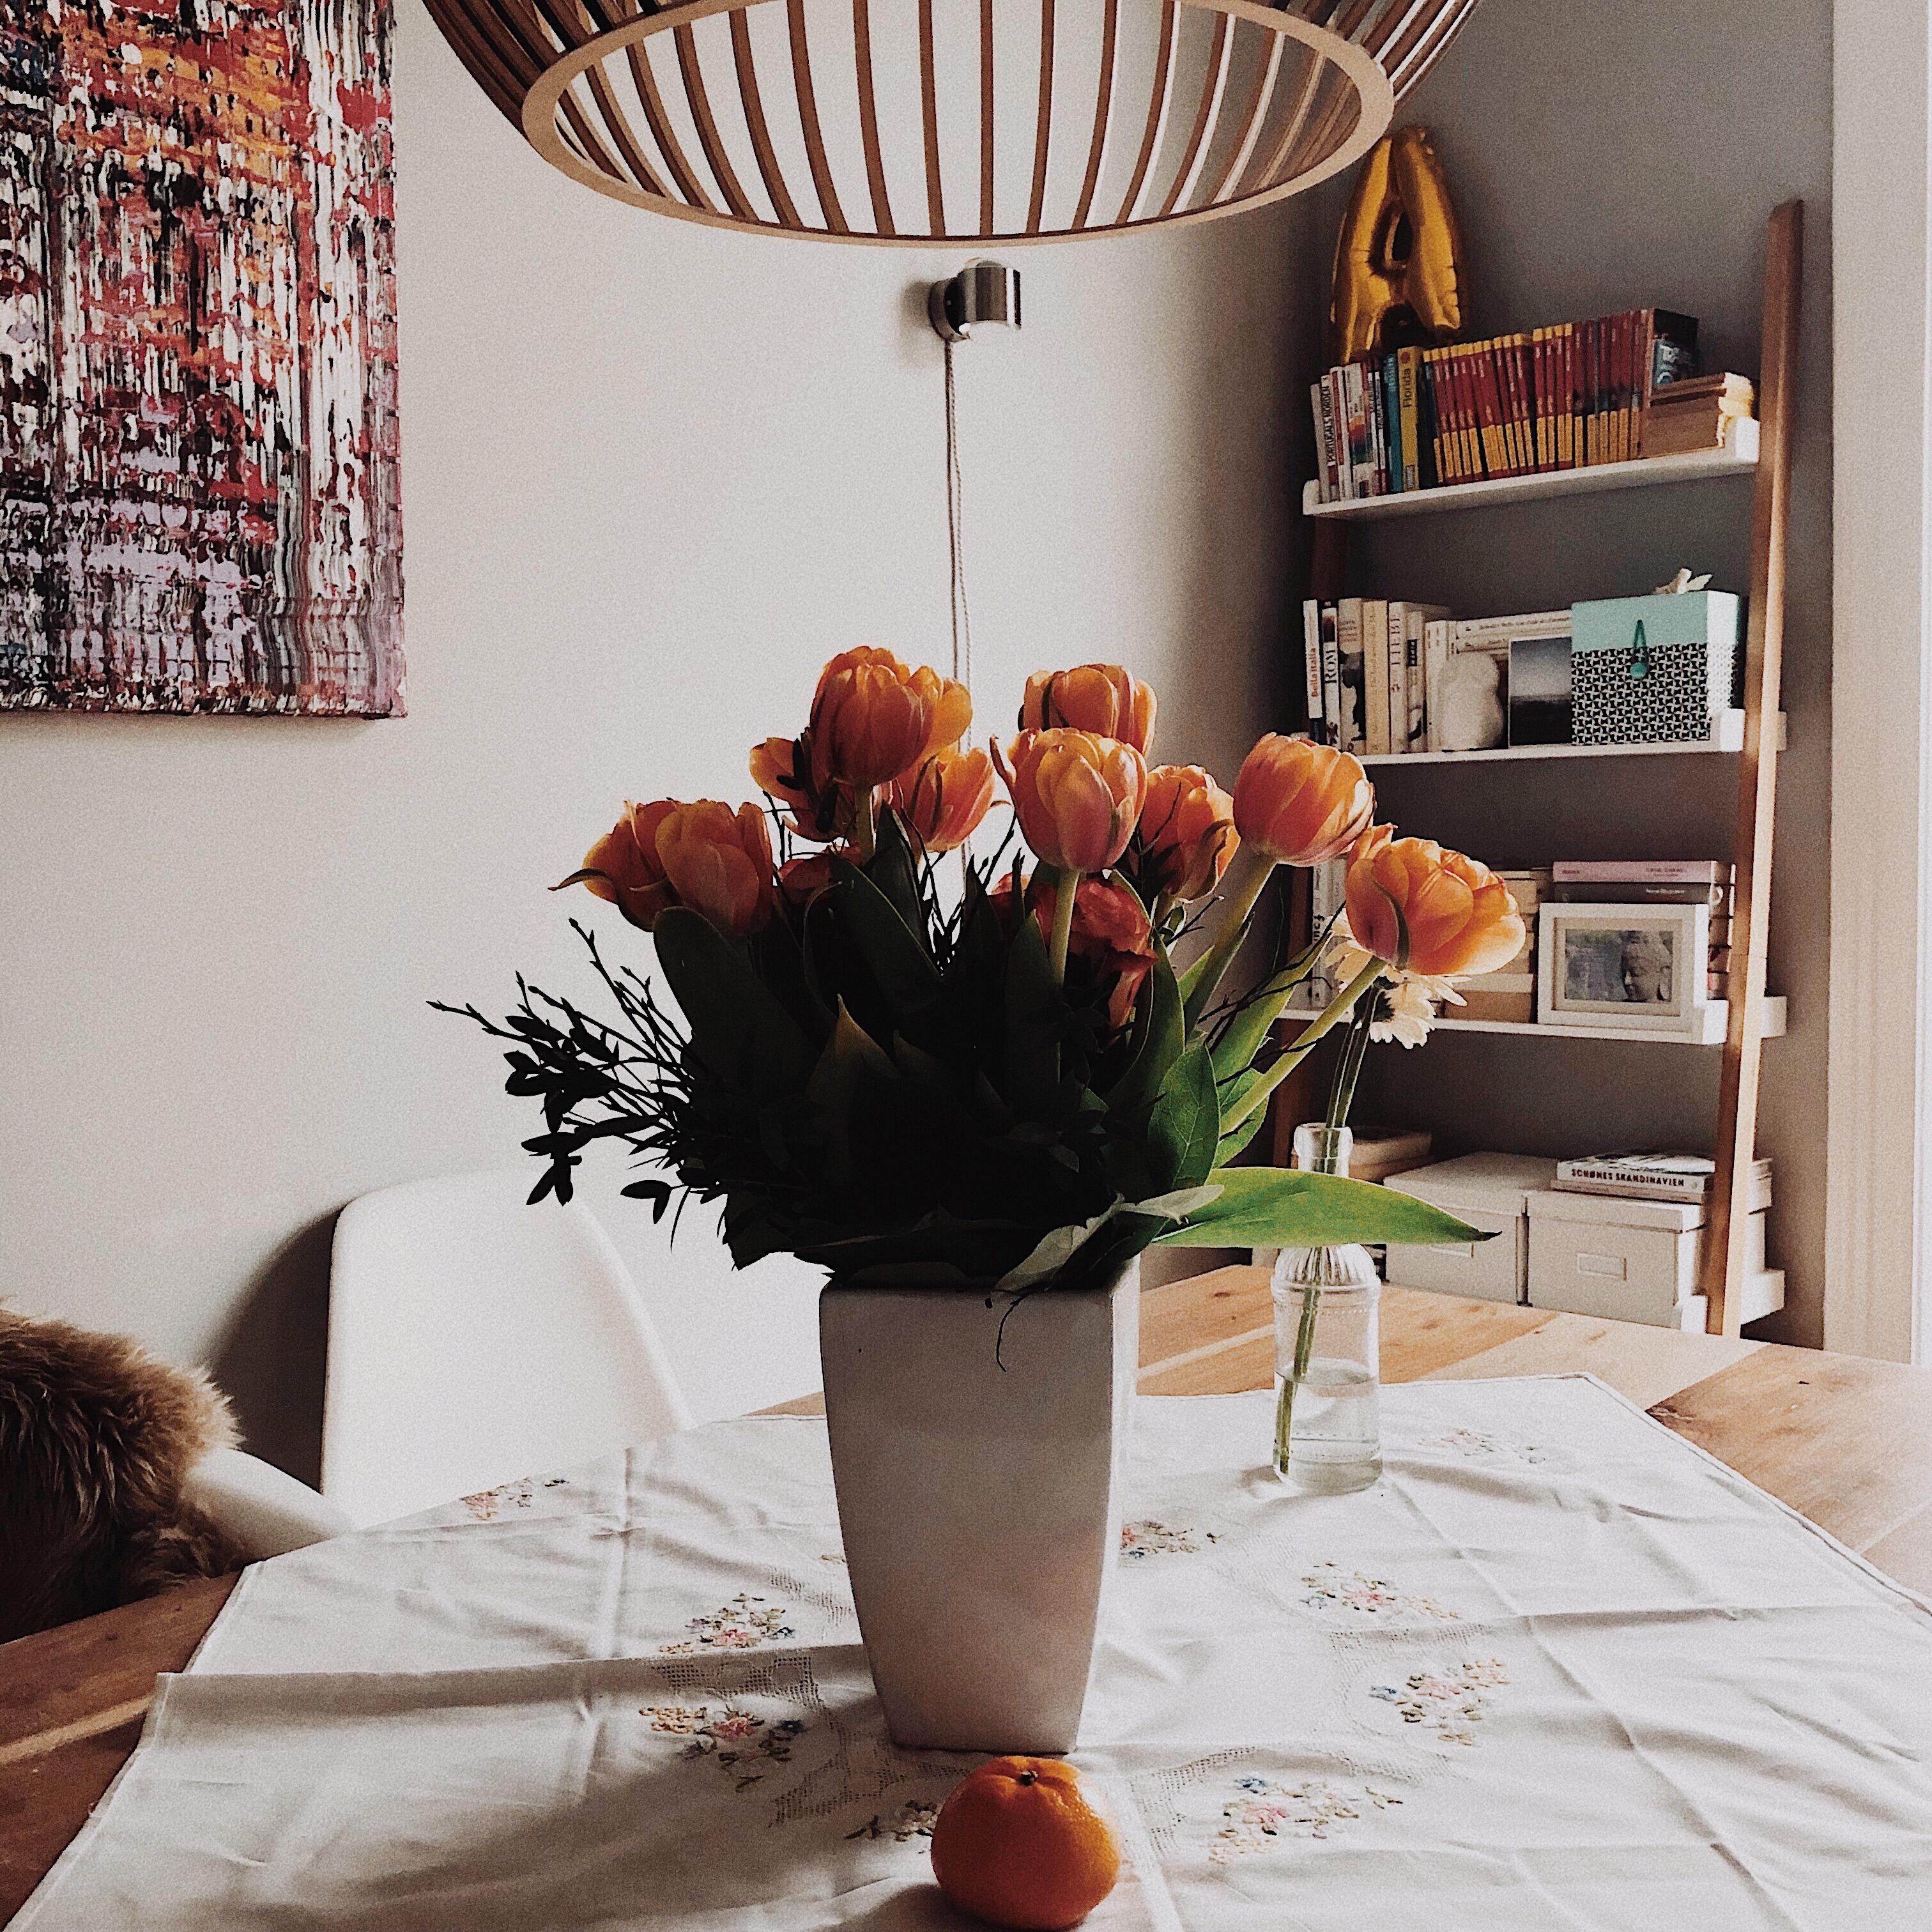 Table situation #homedecor #onthetable #vase #blumen #decoration #lampe #interior #couchstyle #interiorinspo